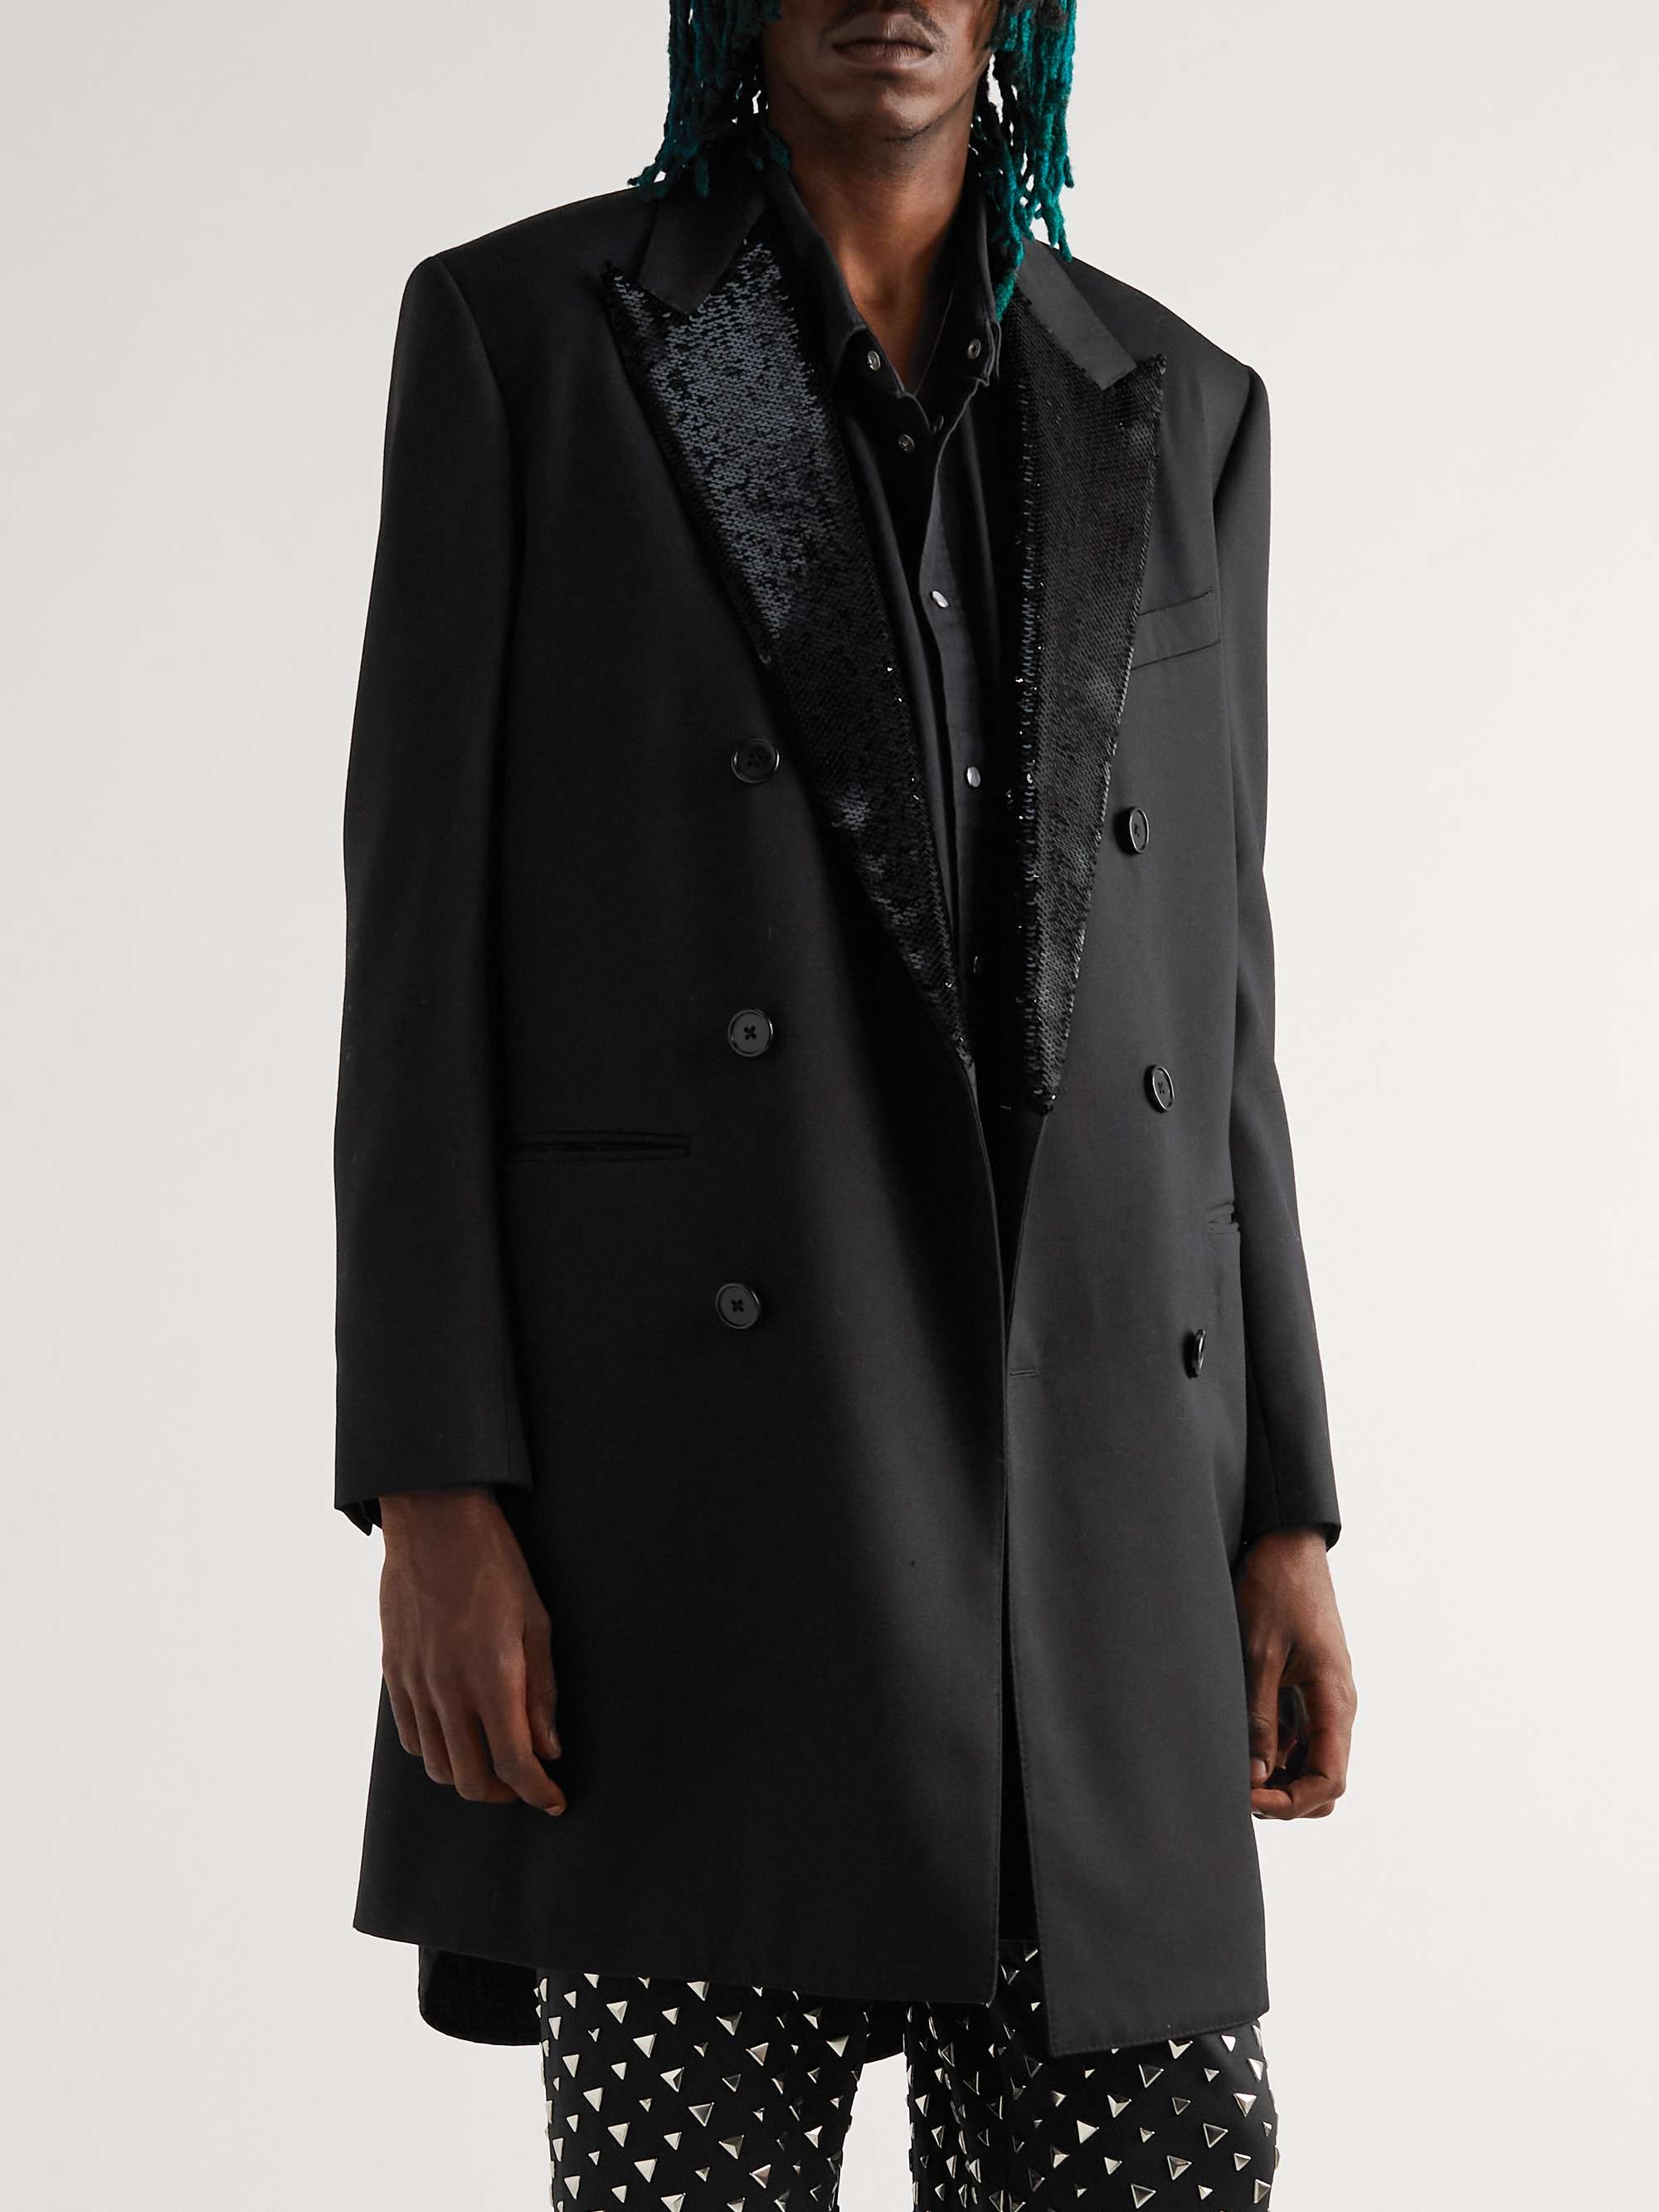 CELINE HOMME Sequin-Embellished Double-Breasted Wool Coat